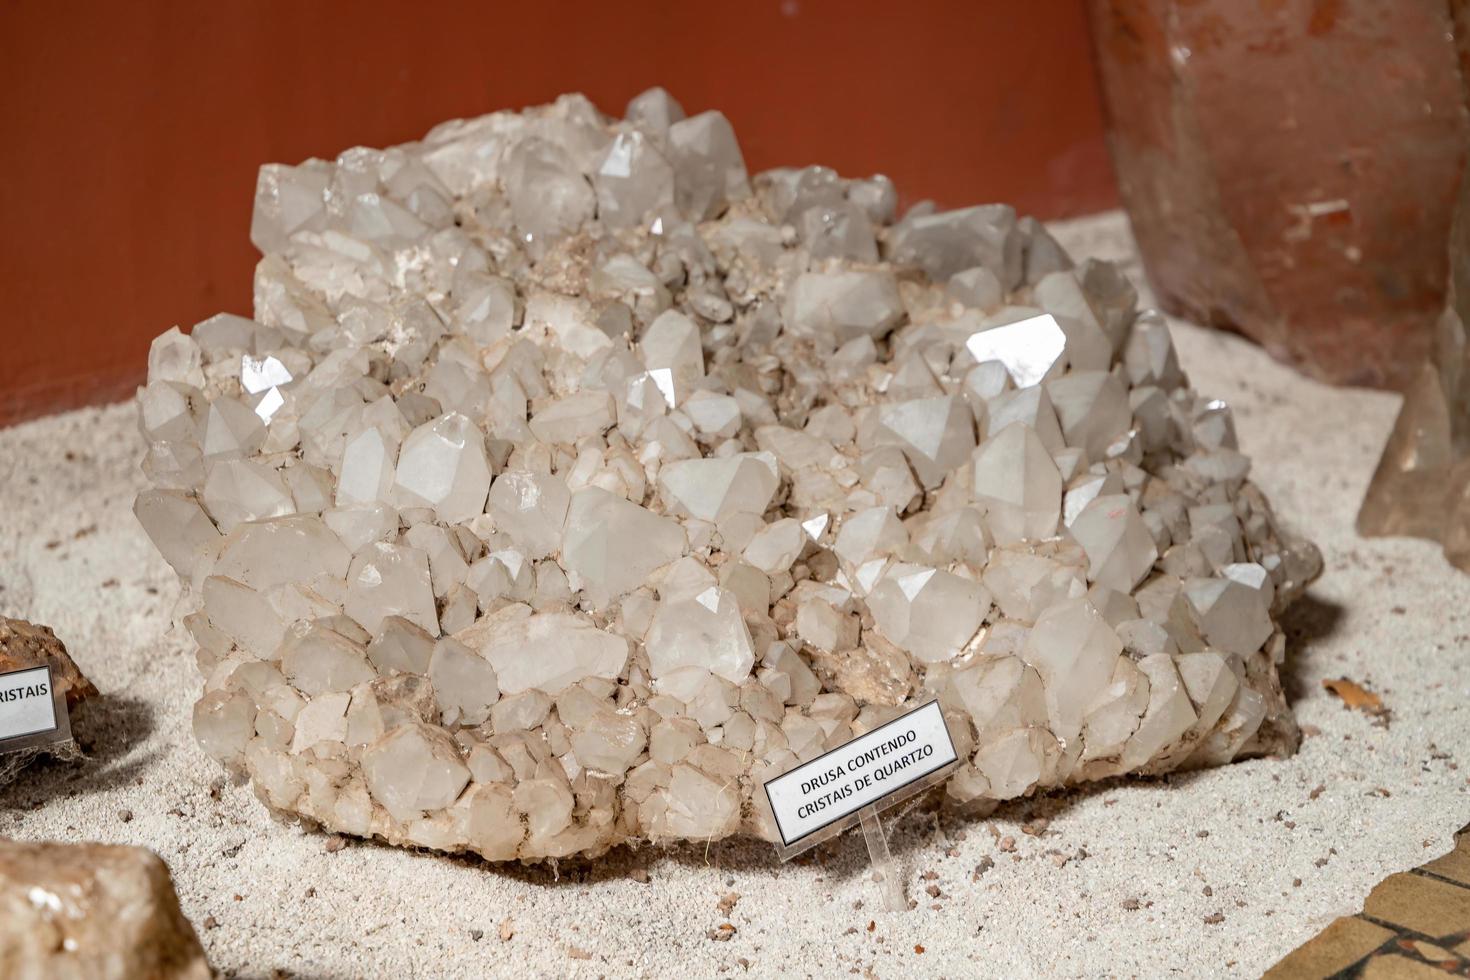 Goiania, Goias, Brazil, 2019 - Druze containing quartz crystals photo